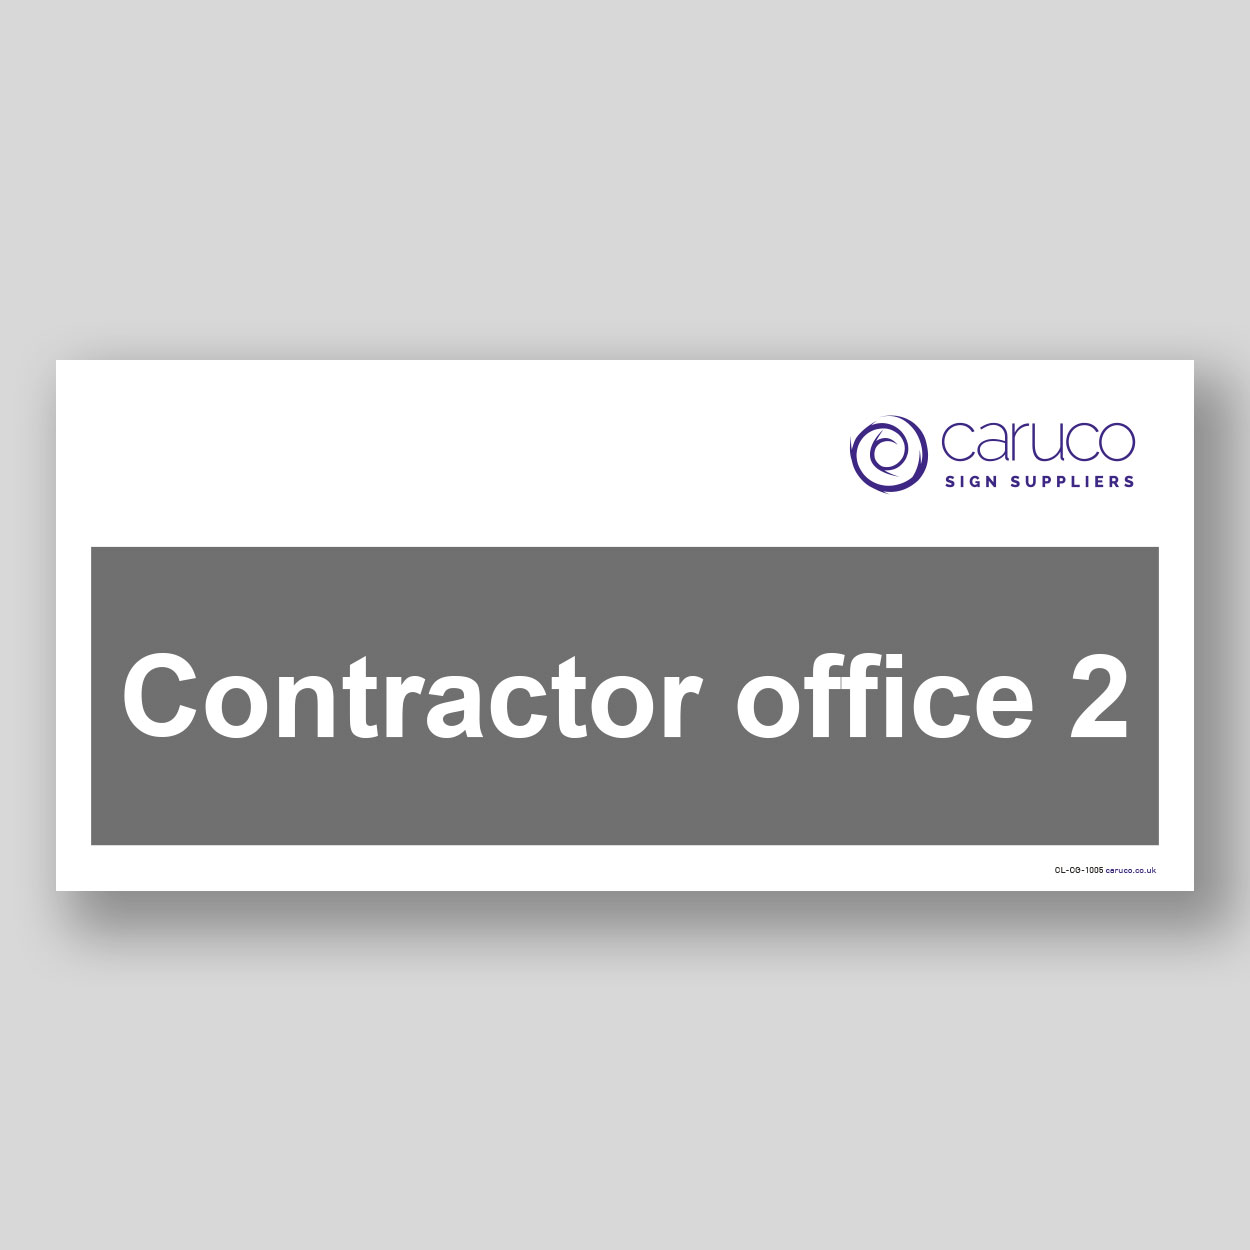 CL-CG-1005 Contractor office 2